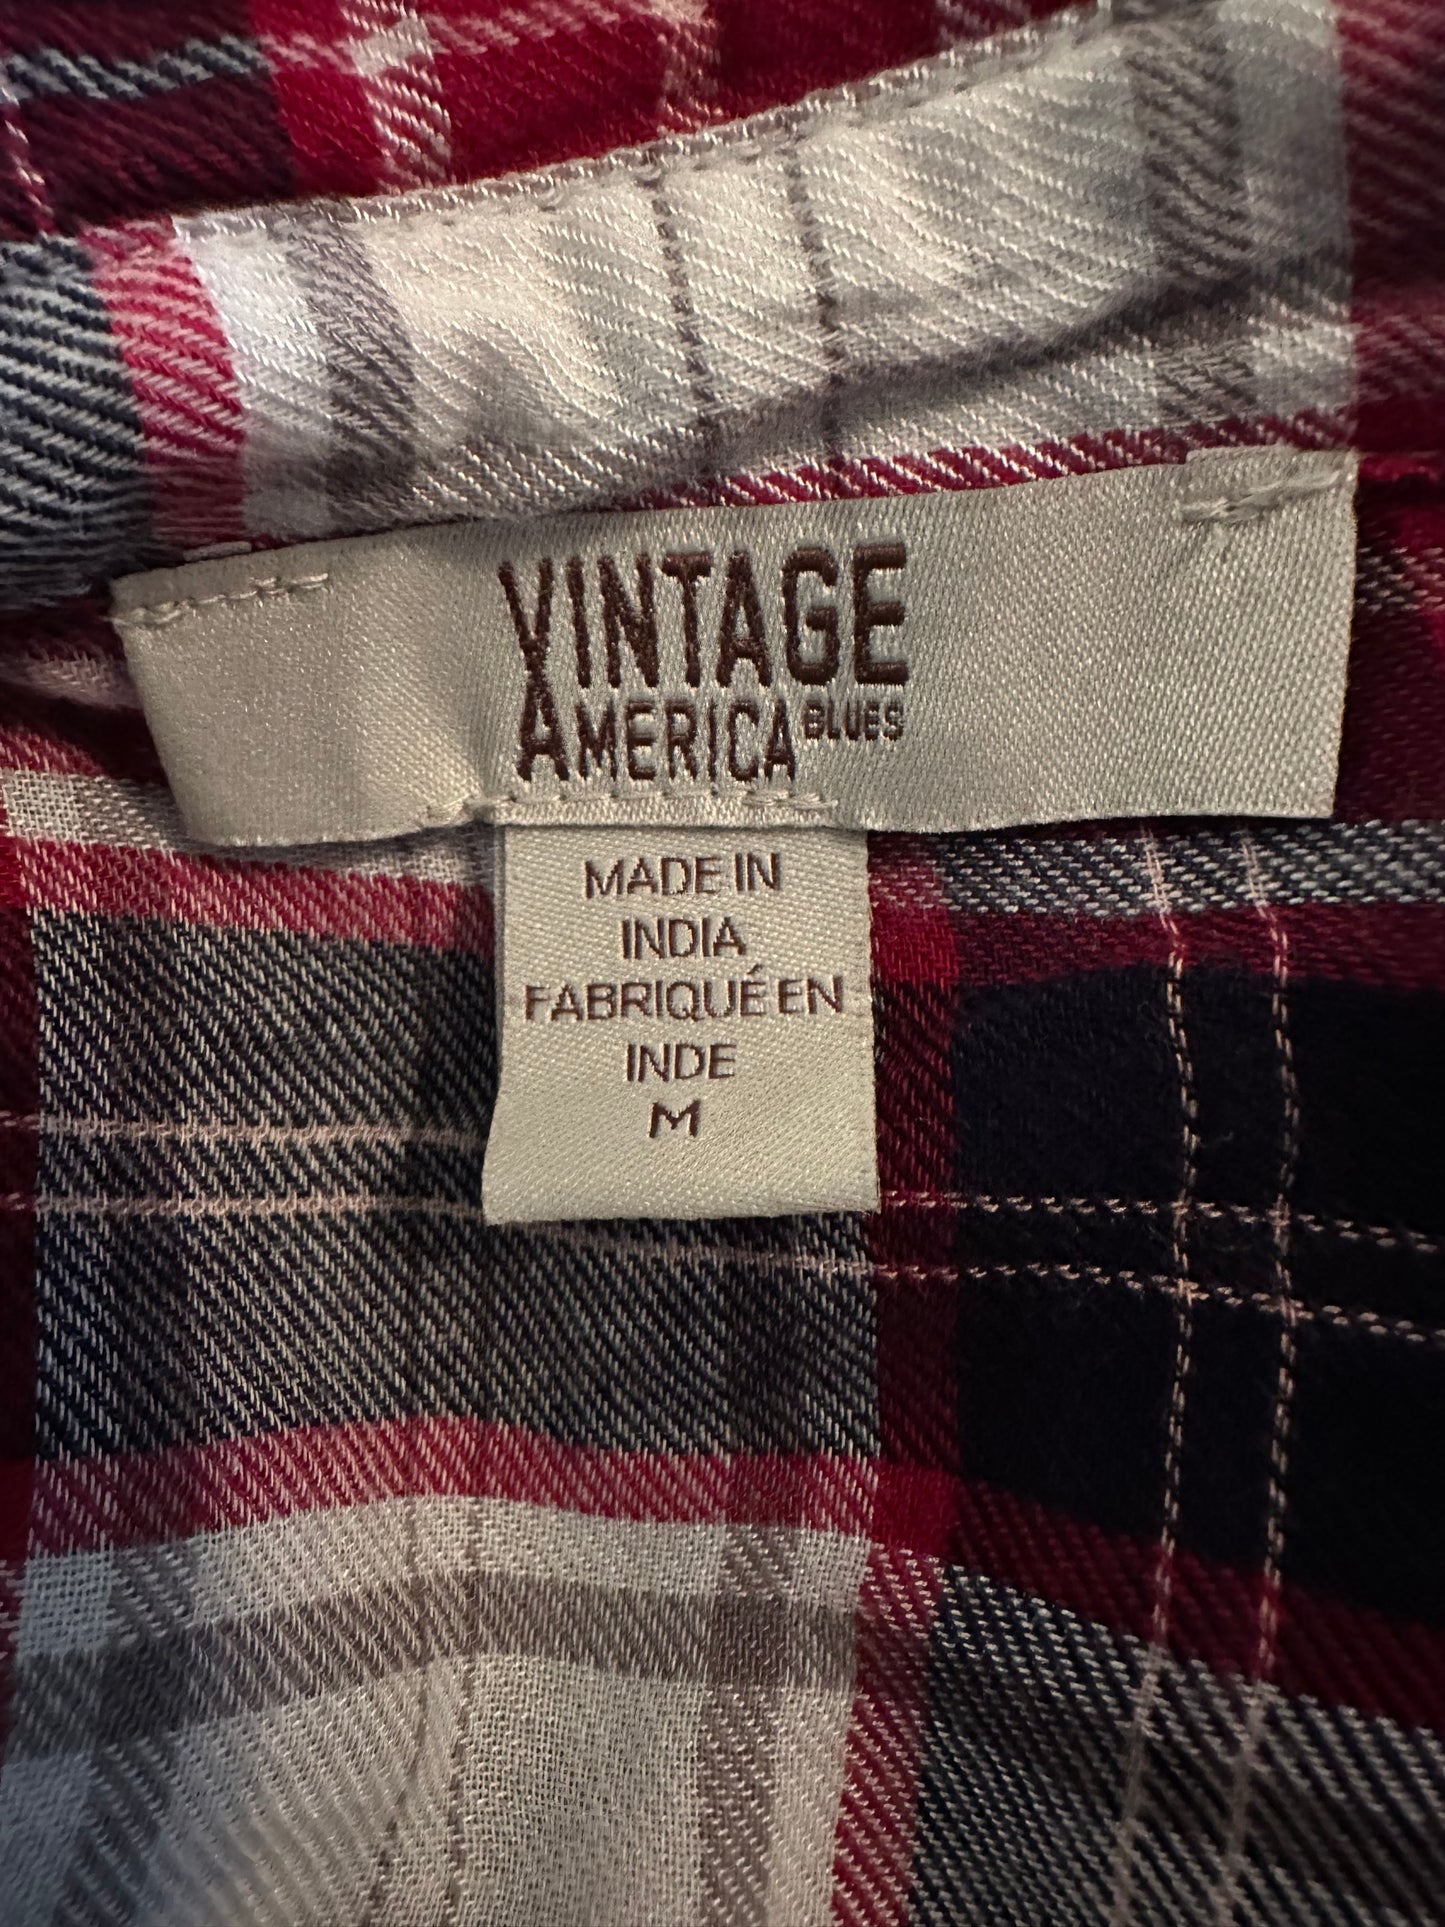 Vintage America Blues - Blue and Red Plaid Shirt